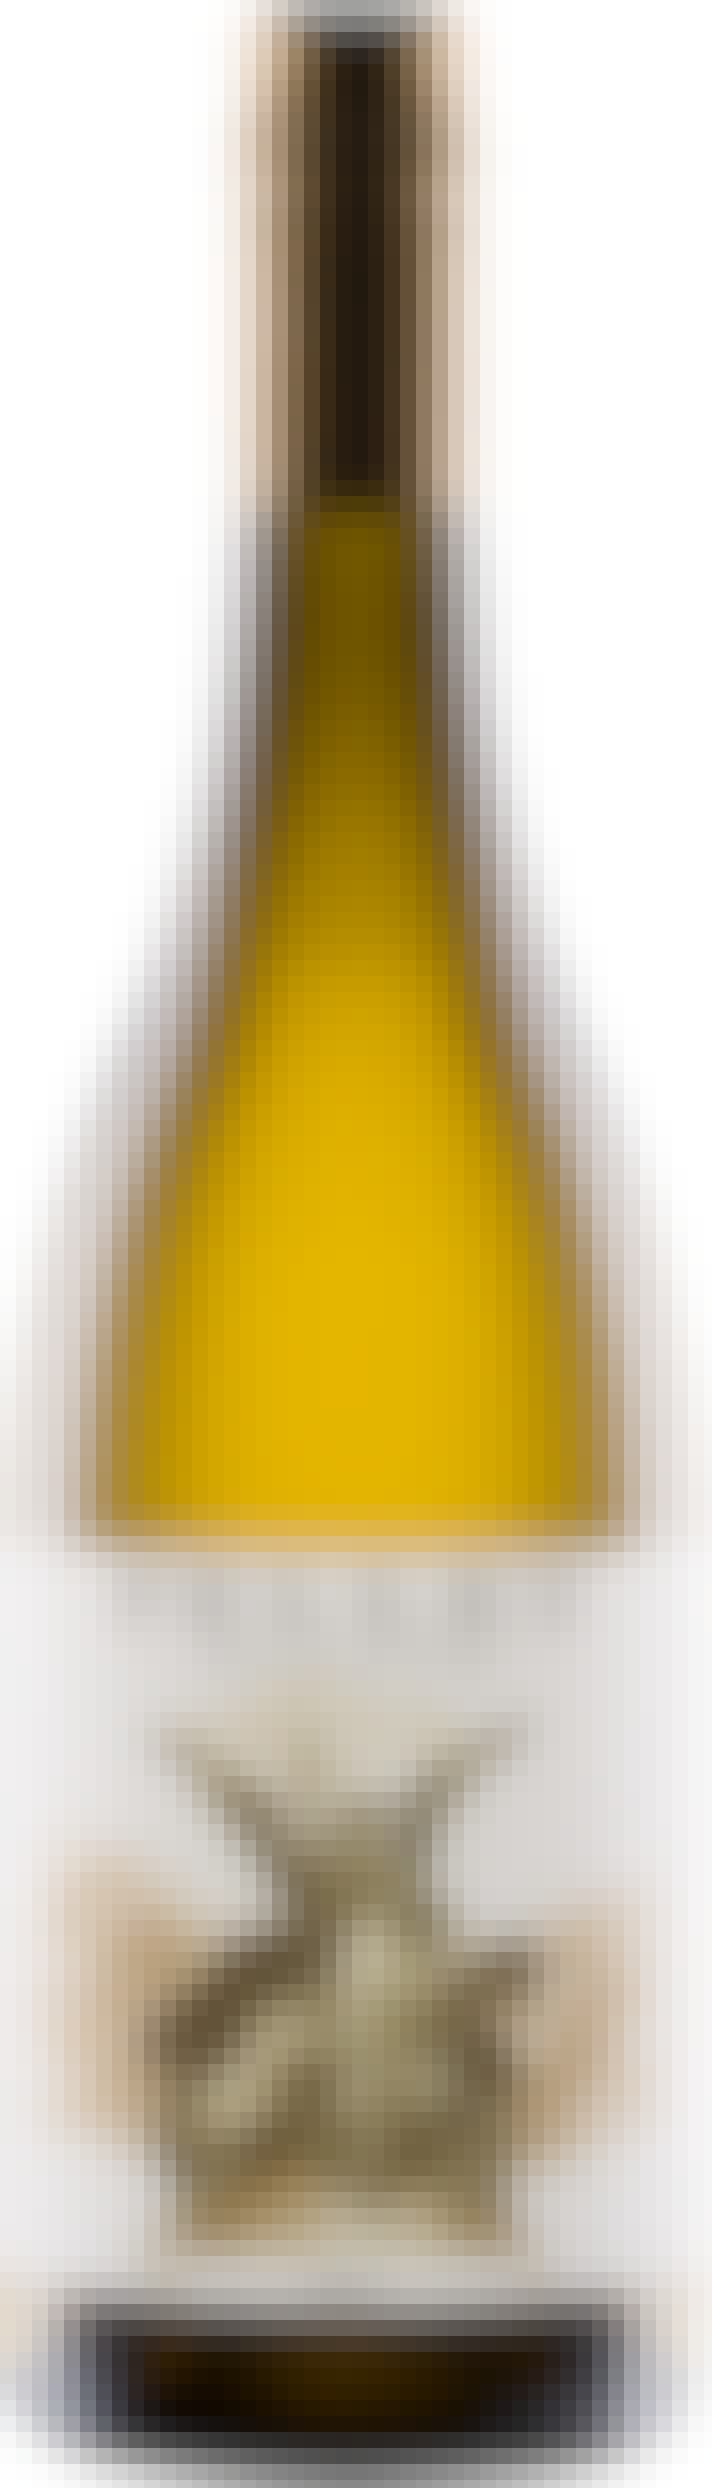 Pellet Estate Sunchase Vineyard Un-Oaked Chardonnay 2017 750ml